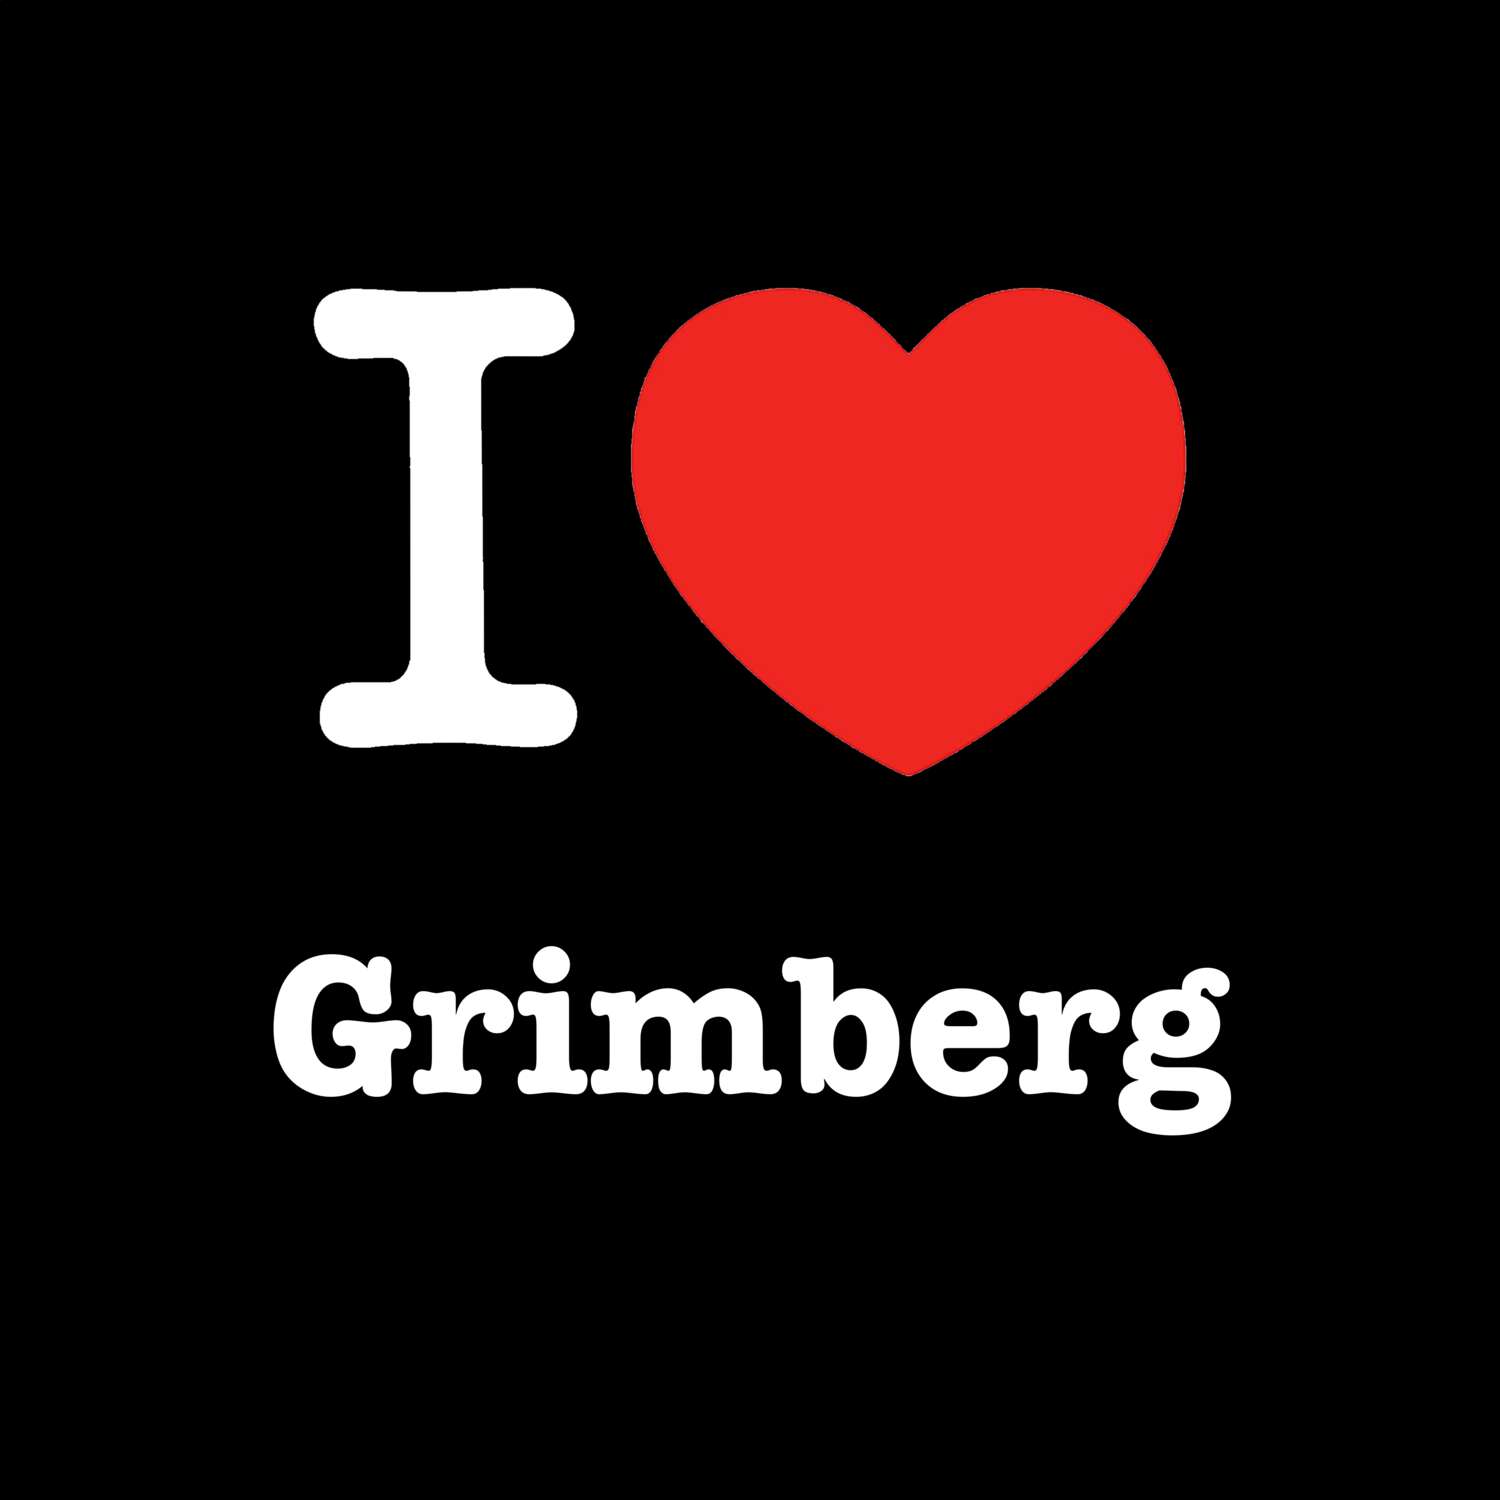 Grimberg T-Shirt »I love«